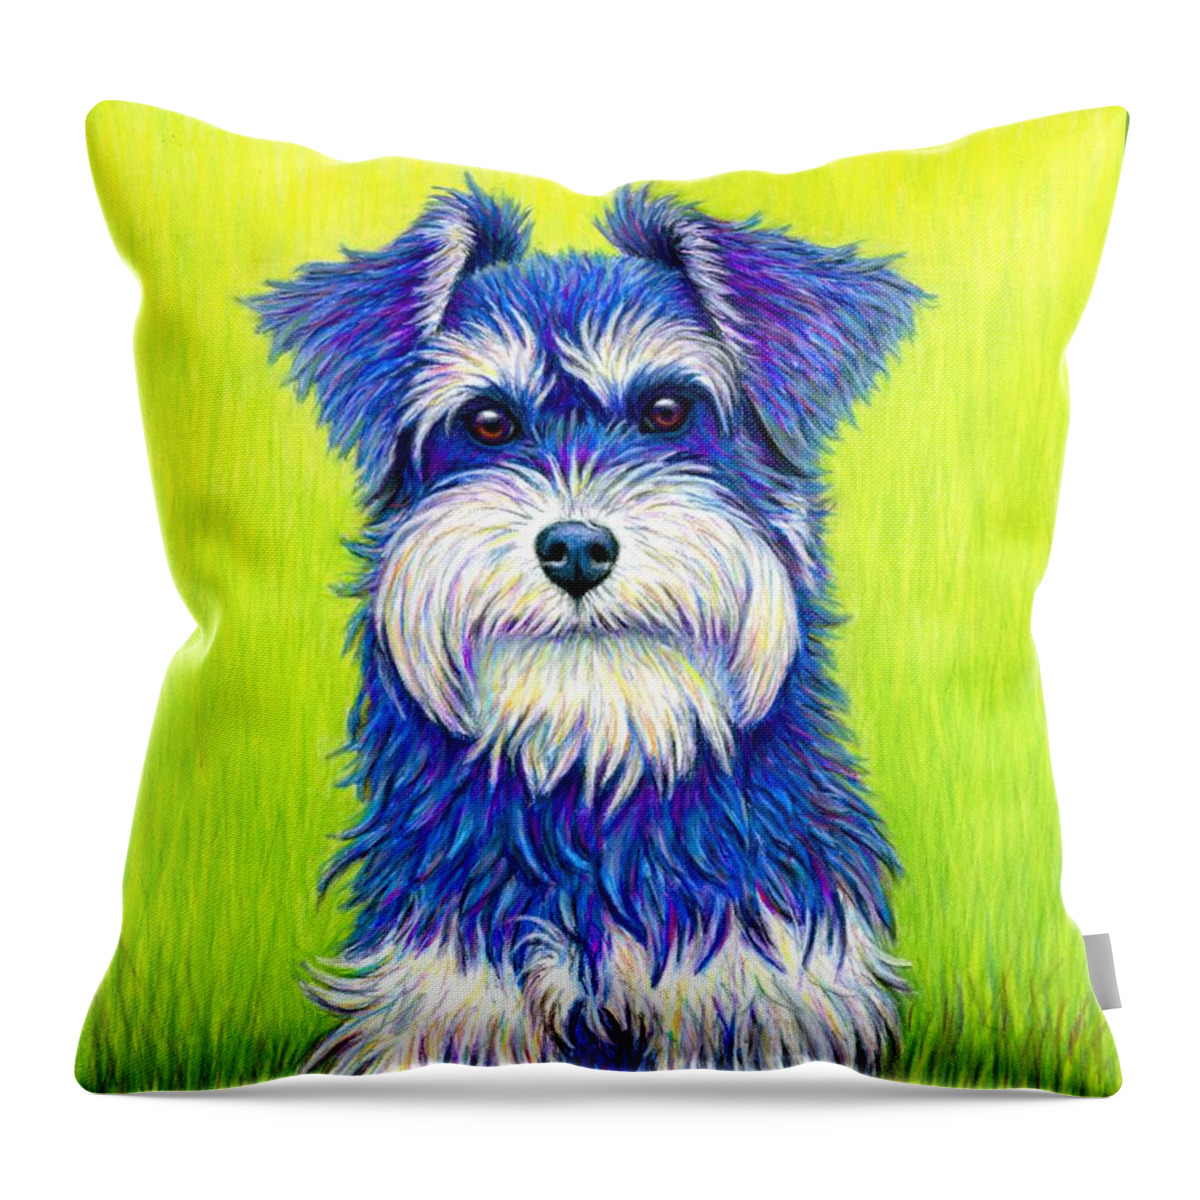 Miniature Schnauzer Throw Pillow featuring the drawing Colorful Miniature Schnauzer Dog by Rebecca Wang